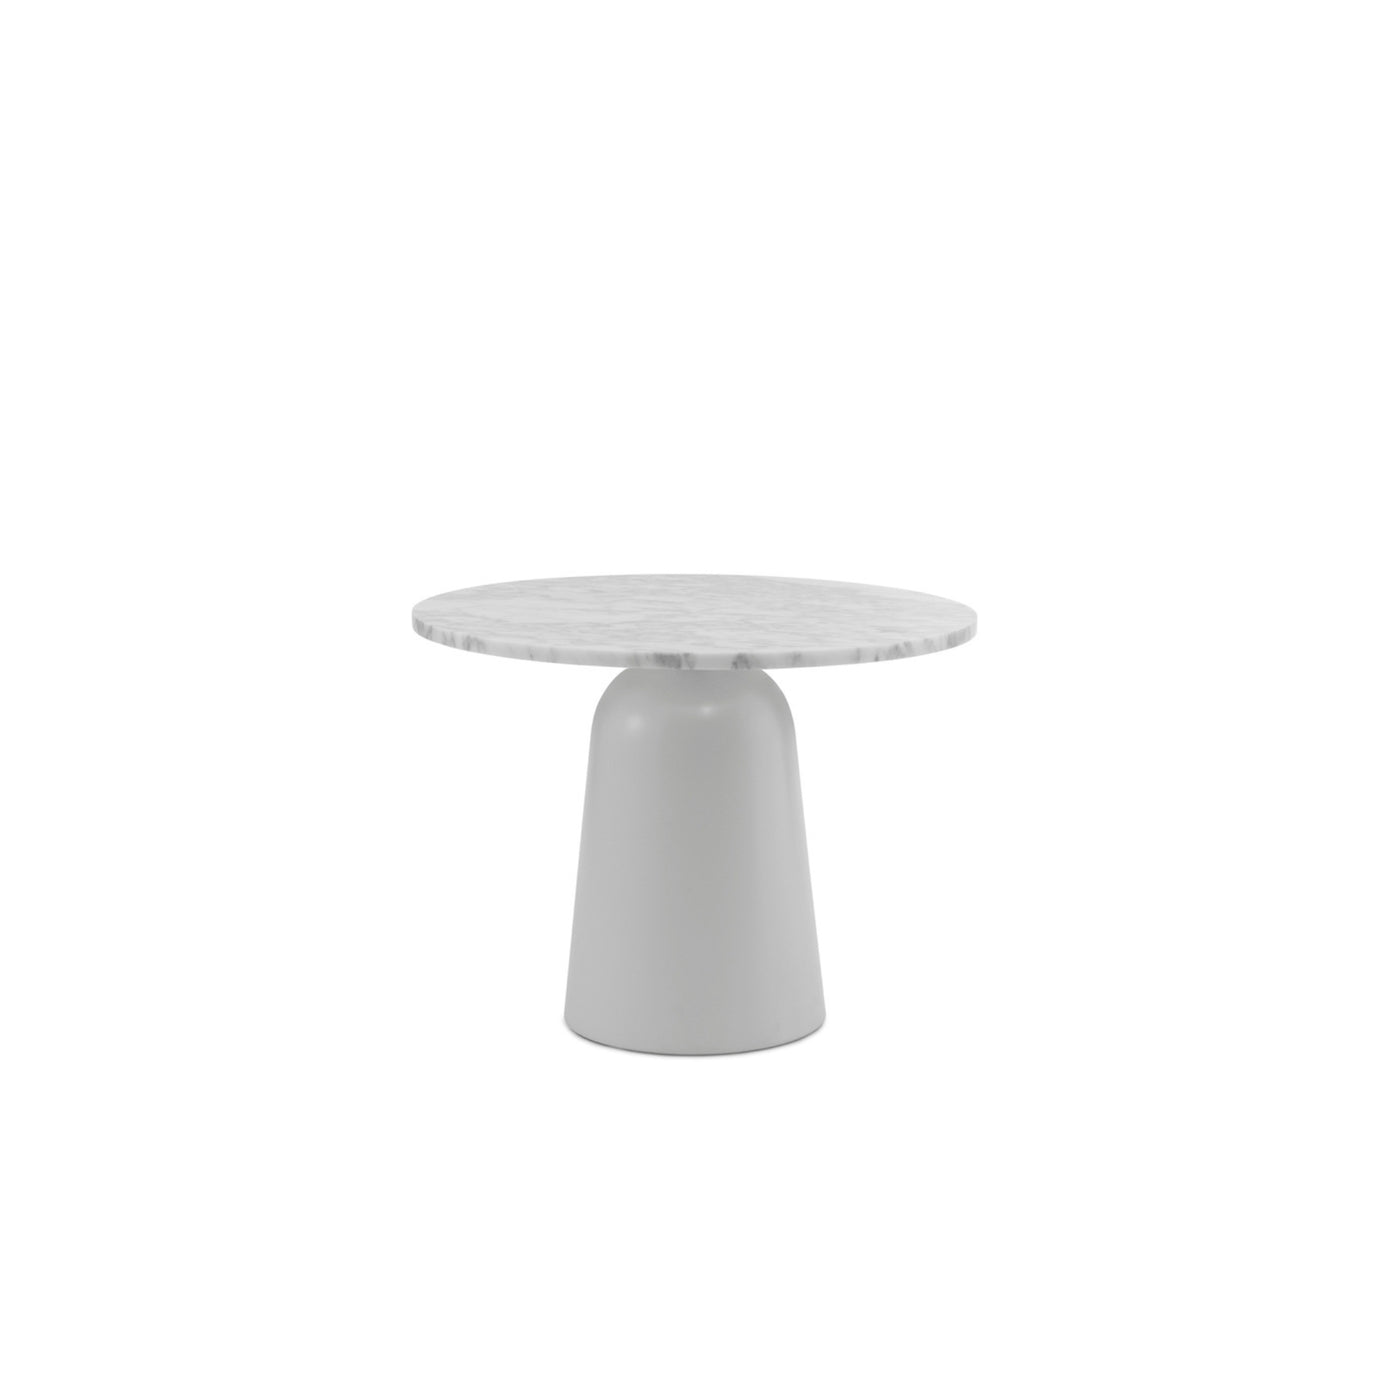 Normann Copenhagen Turn Table at someday designs. #colour_white-marble